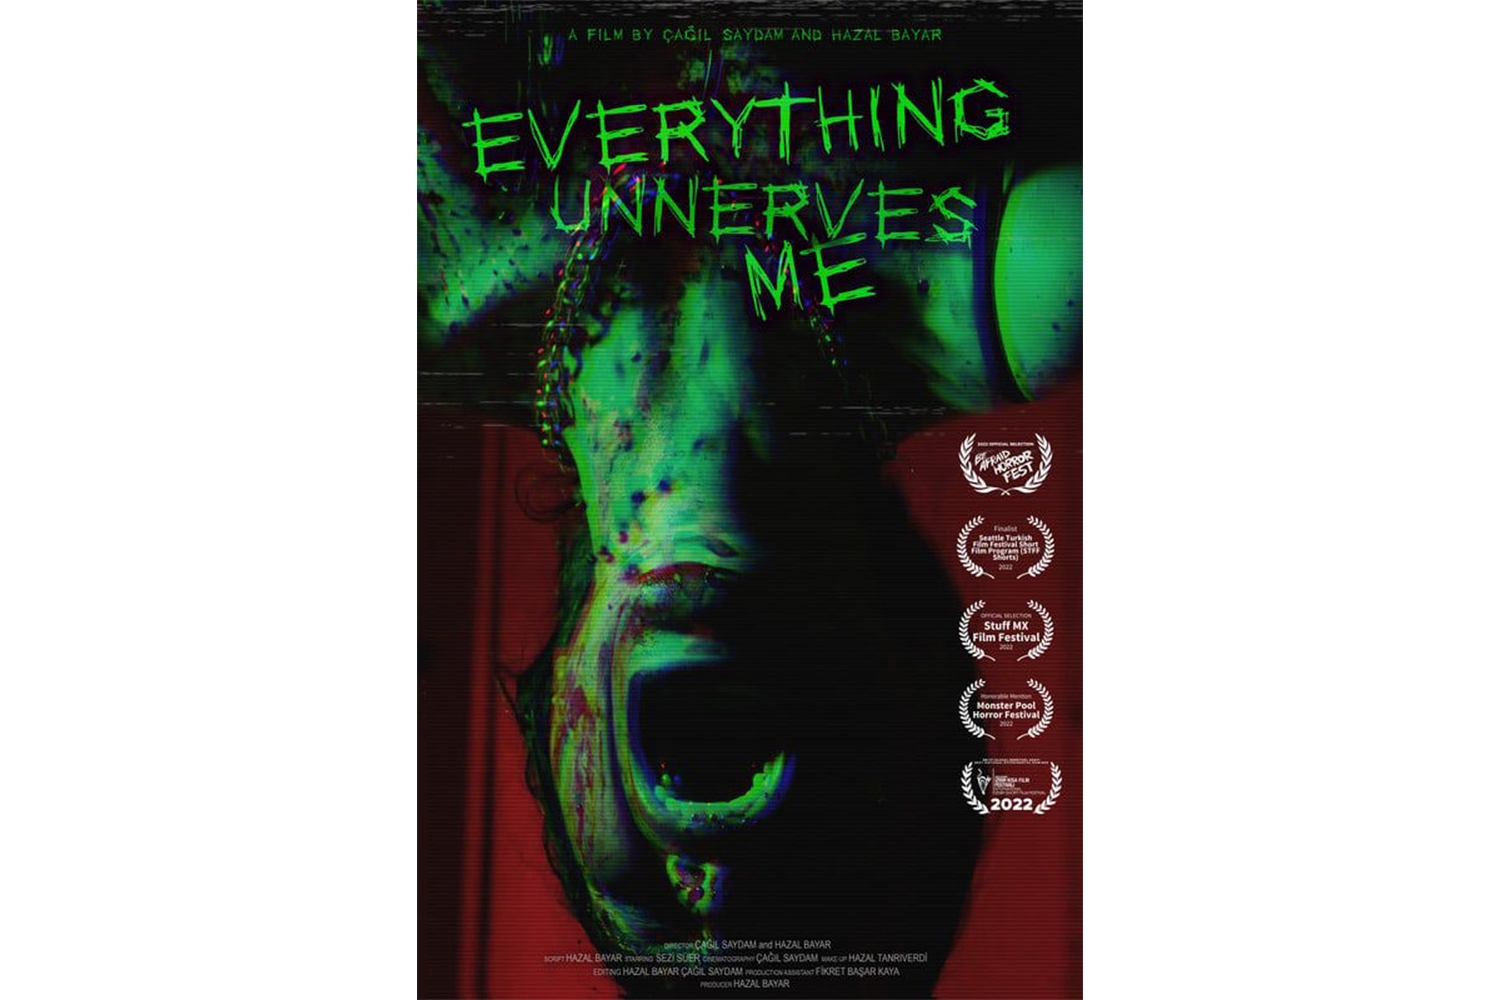 Everything Unnerves Me, directed by Hazal Bayar and Çağıl Saydam at International Festivals